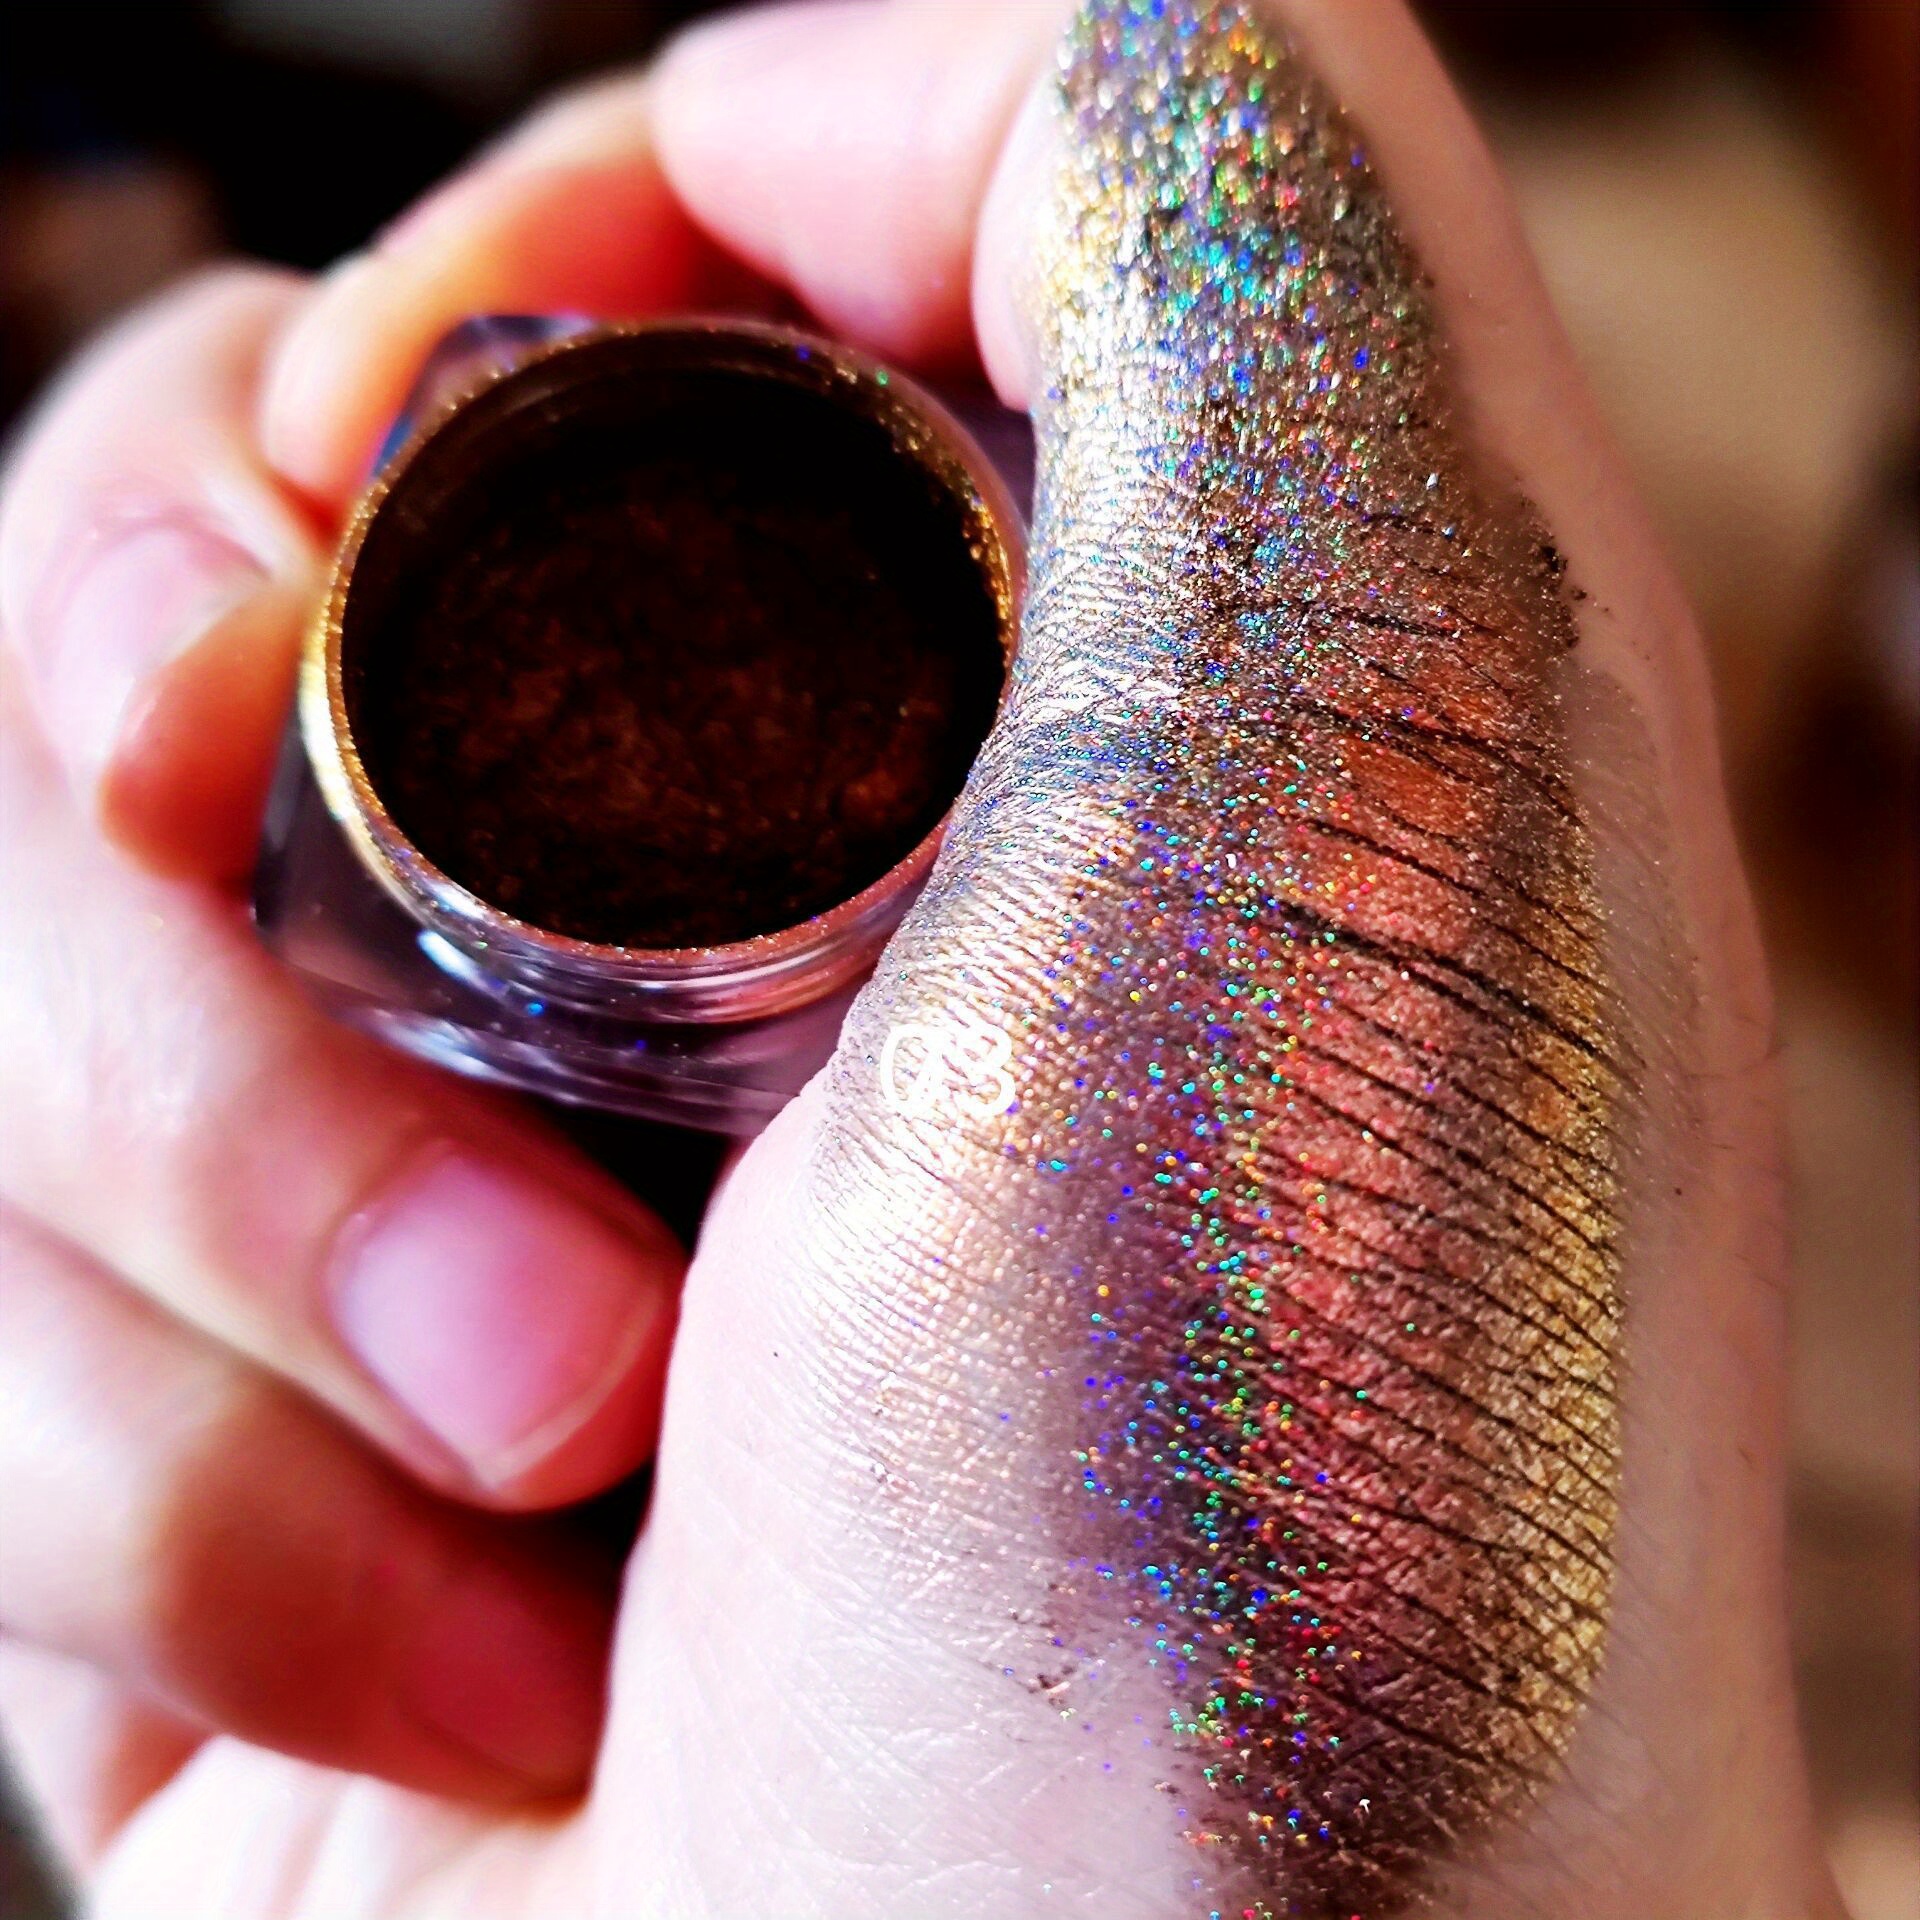 Multi Chrome Eyeshadow Pigments Long Lasting Chameleon Liquid Glitter Eye Shadow 03